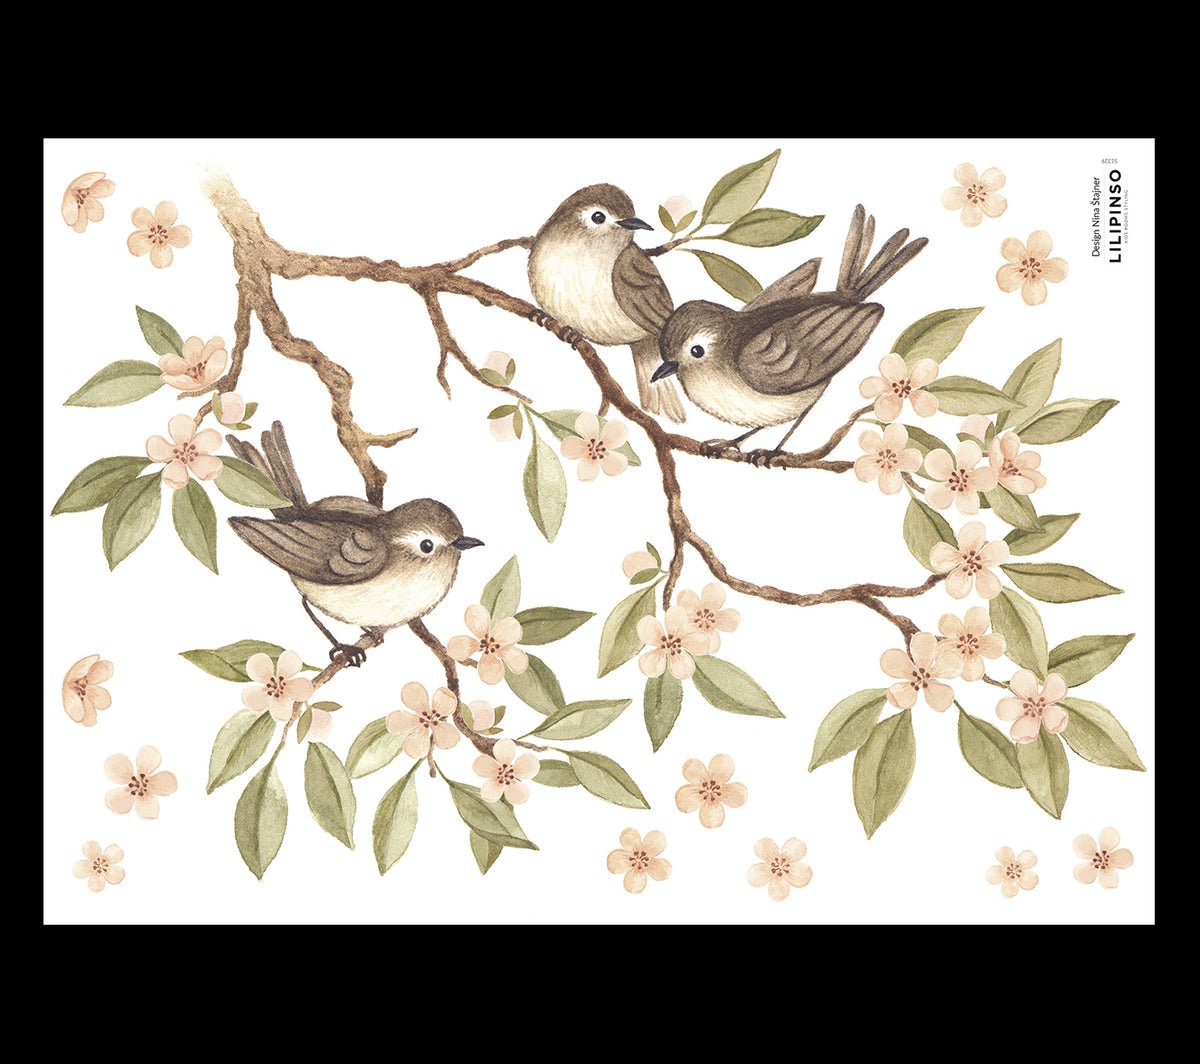 OH DEER - Stickers muraux - Branche fleurie et oiseaux